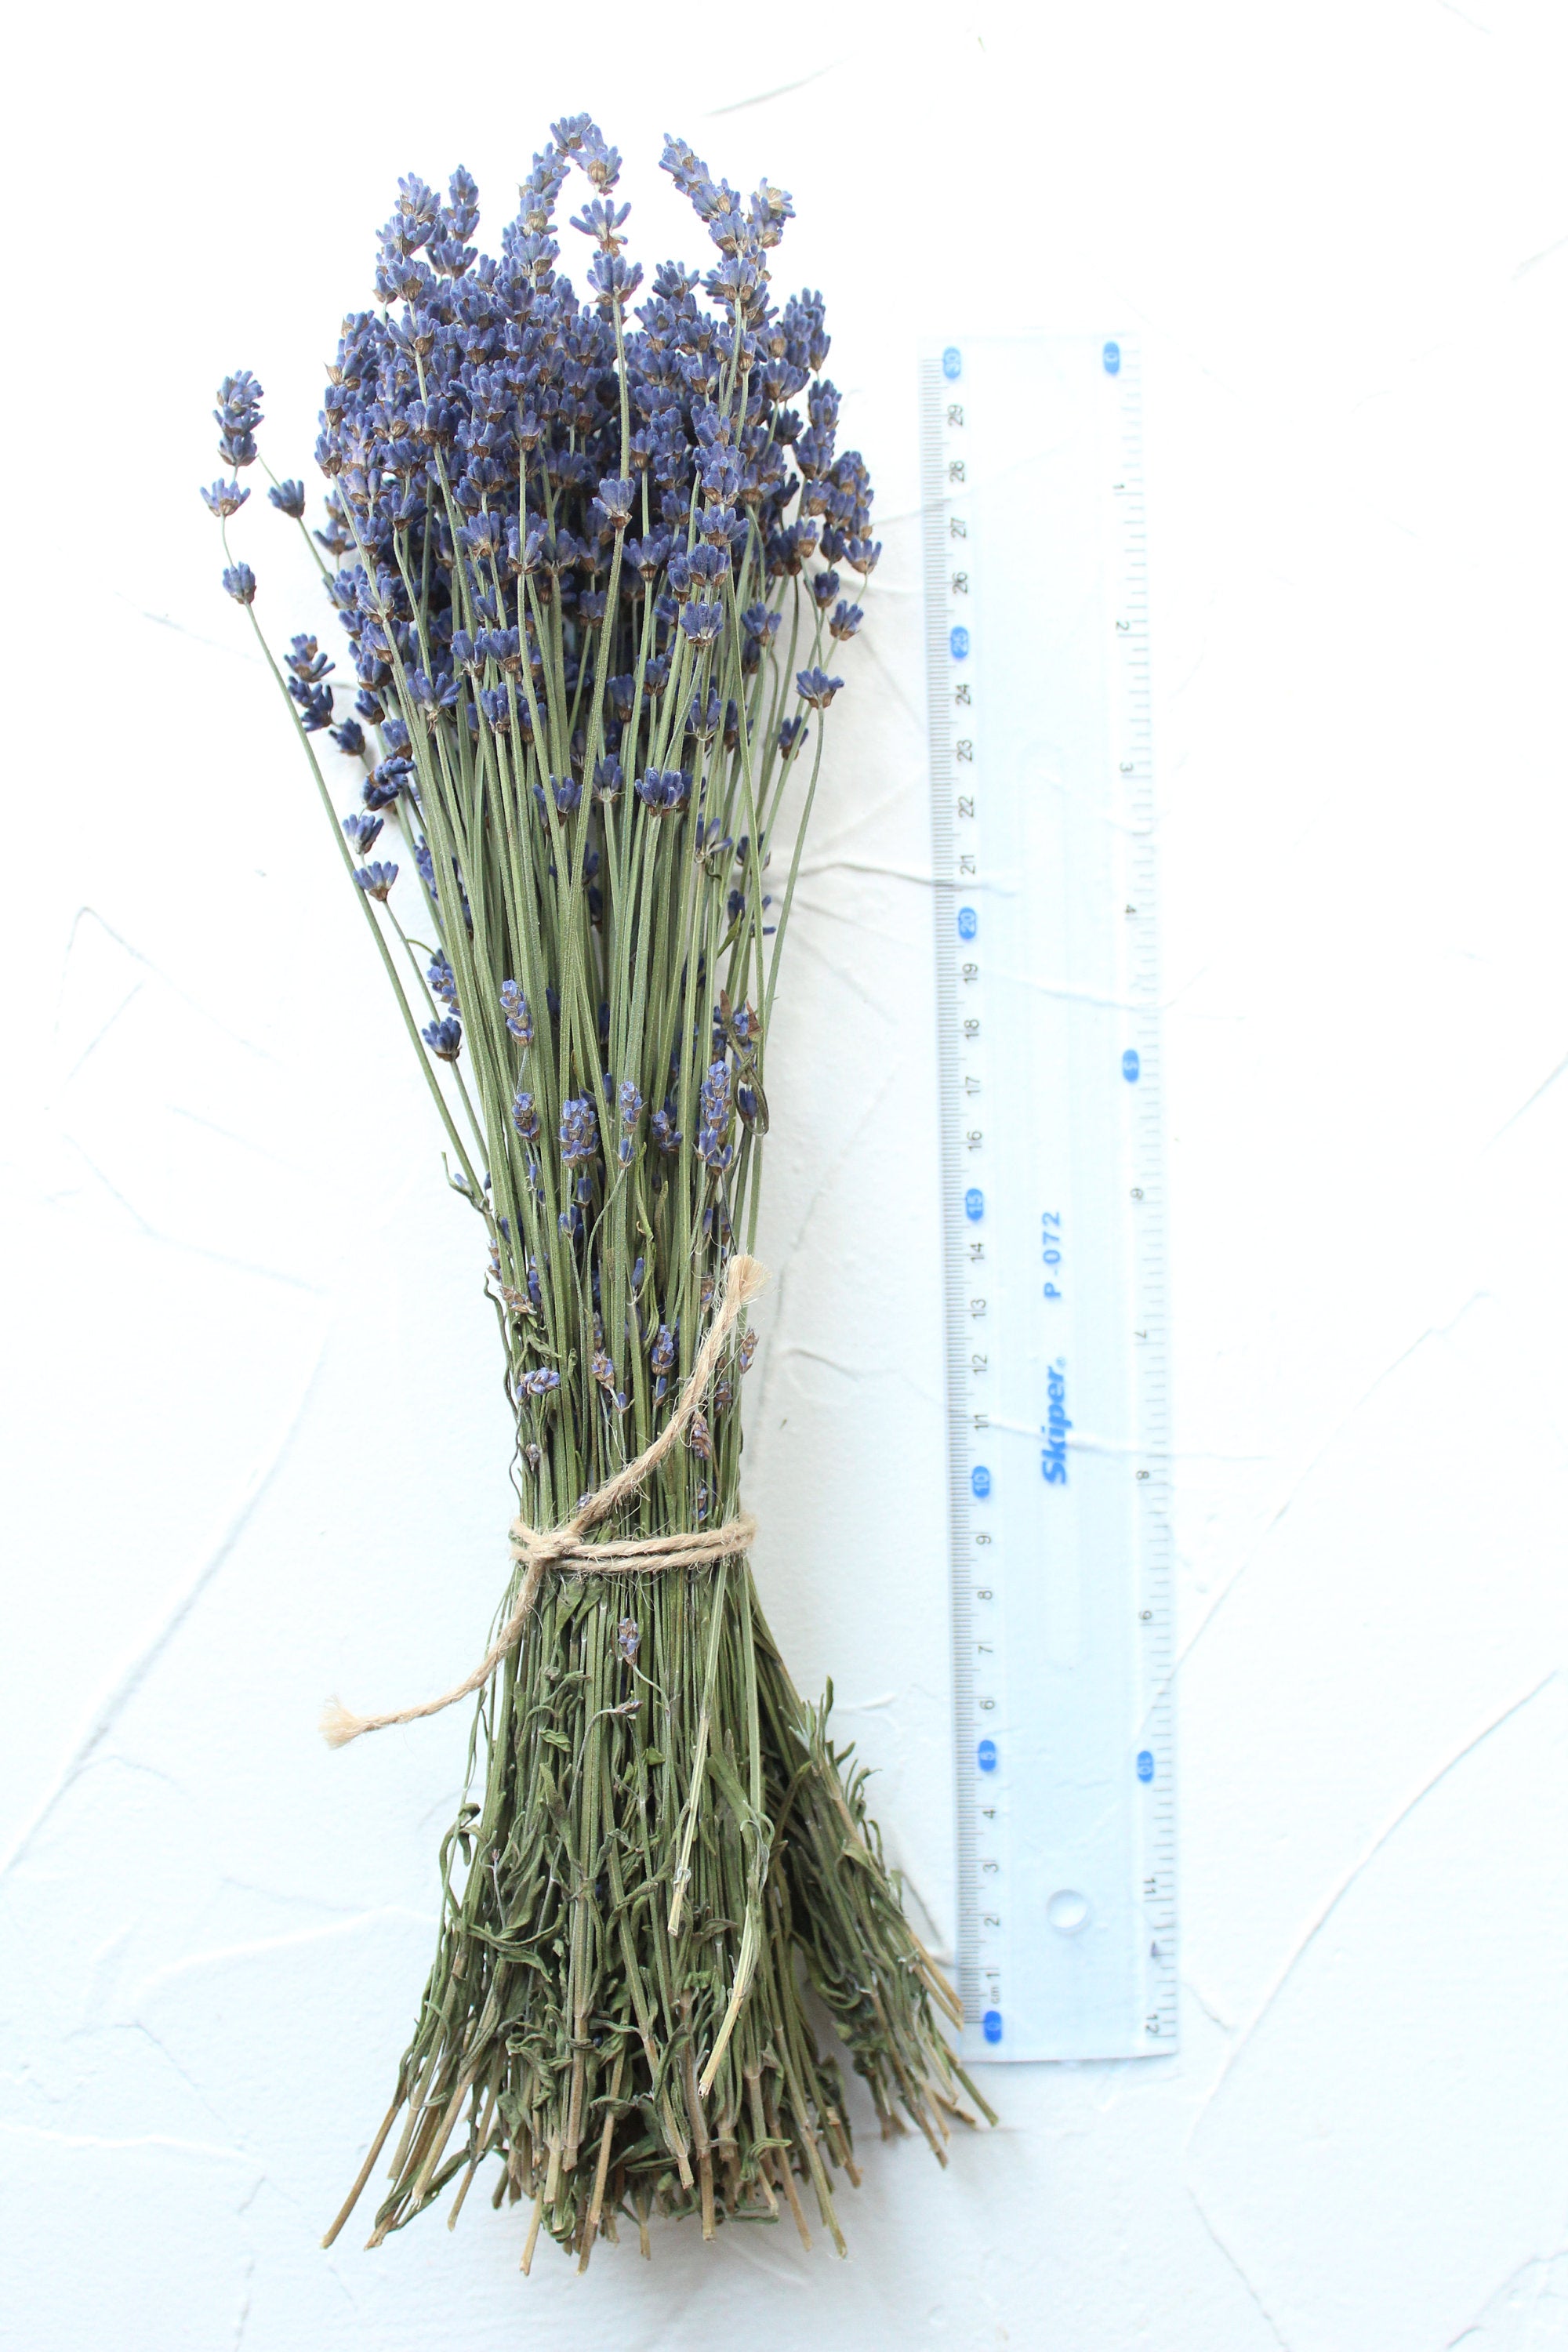 Dried Blue Lavender Bouquets, 100-120 Stem Per Bouquet, High Quality, Natural, Organic, Biodegraddable, Wedding, Craft